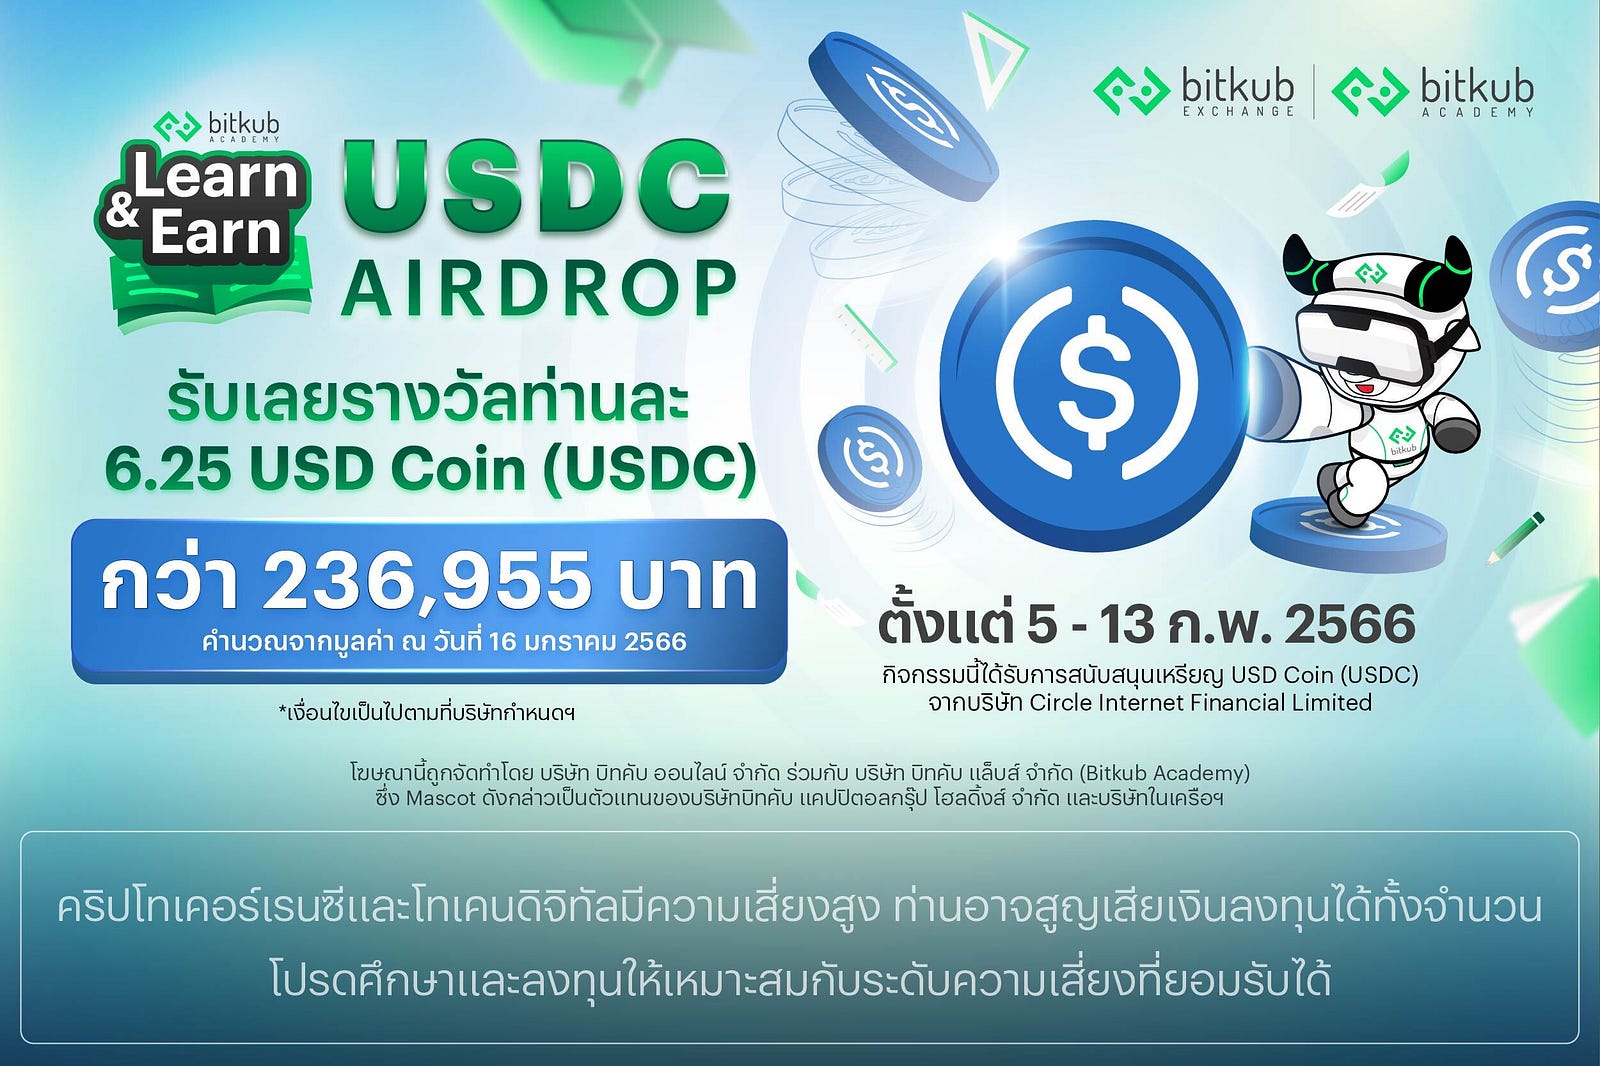 Bitkub Learn & Earn รู้จริง รับเลย! USDC Airdrop